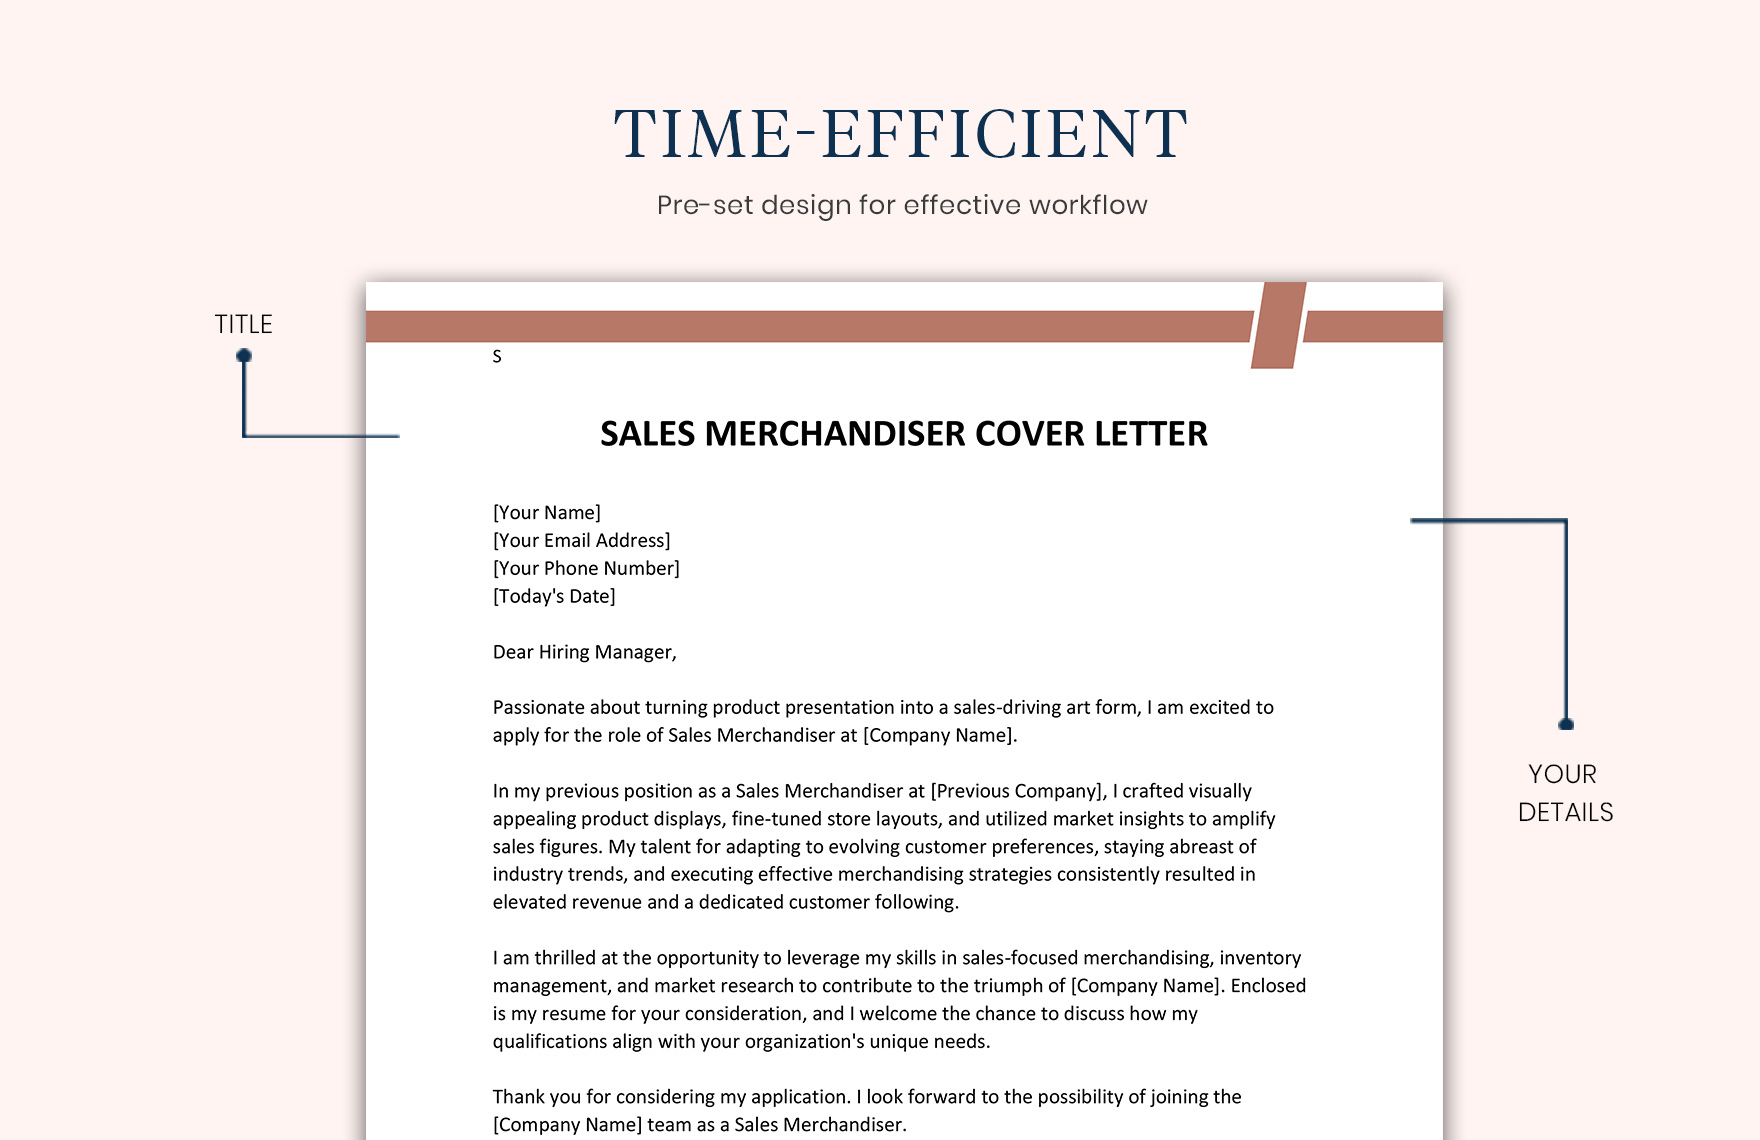 Sales Merchandiser Cover Letter